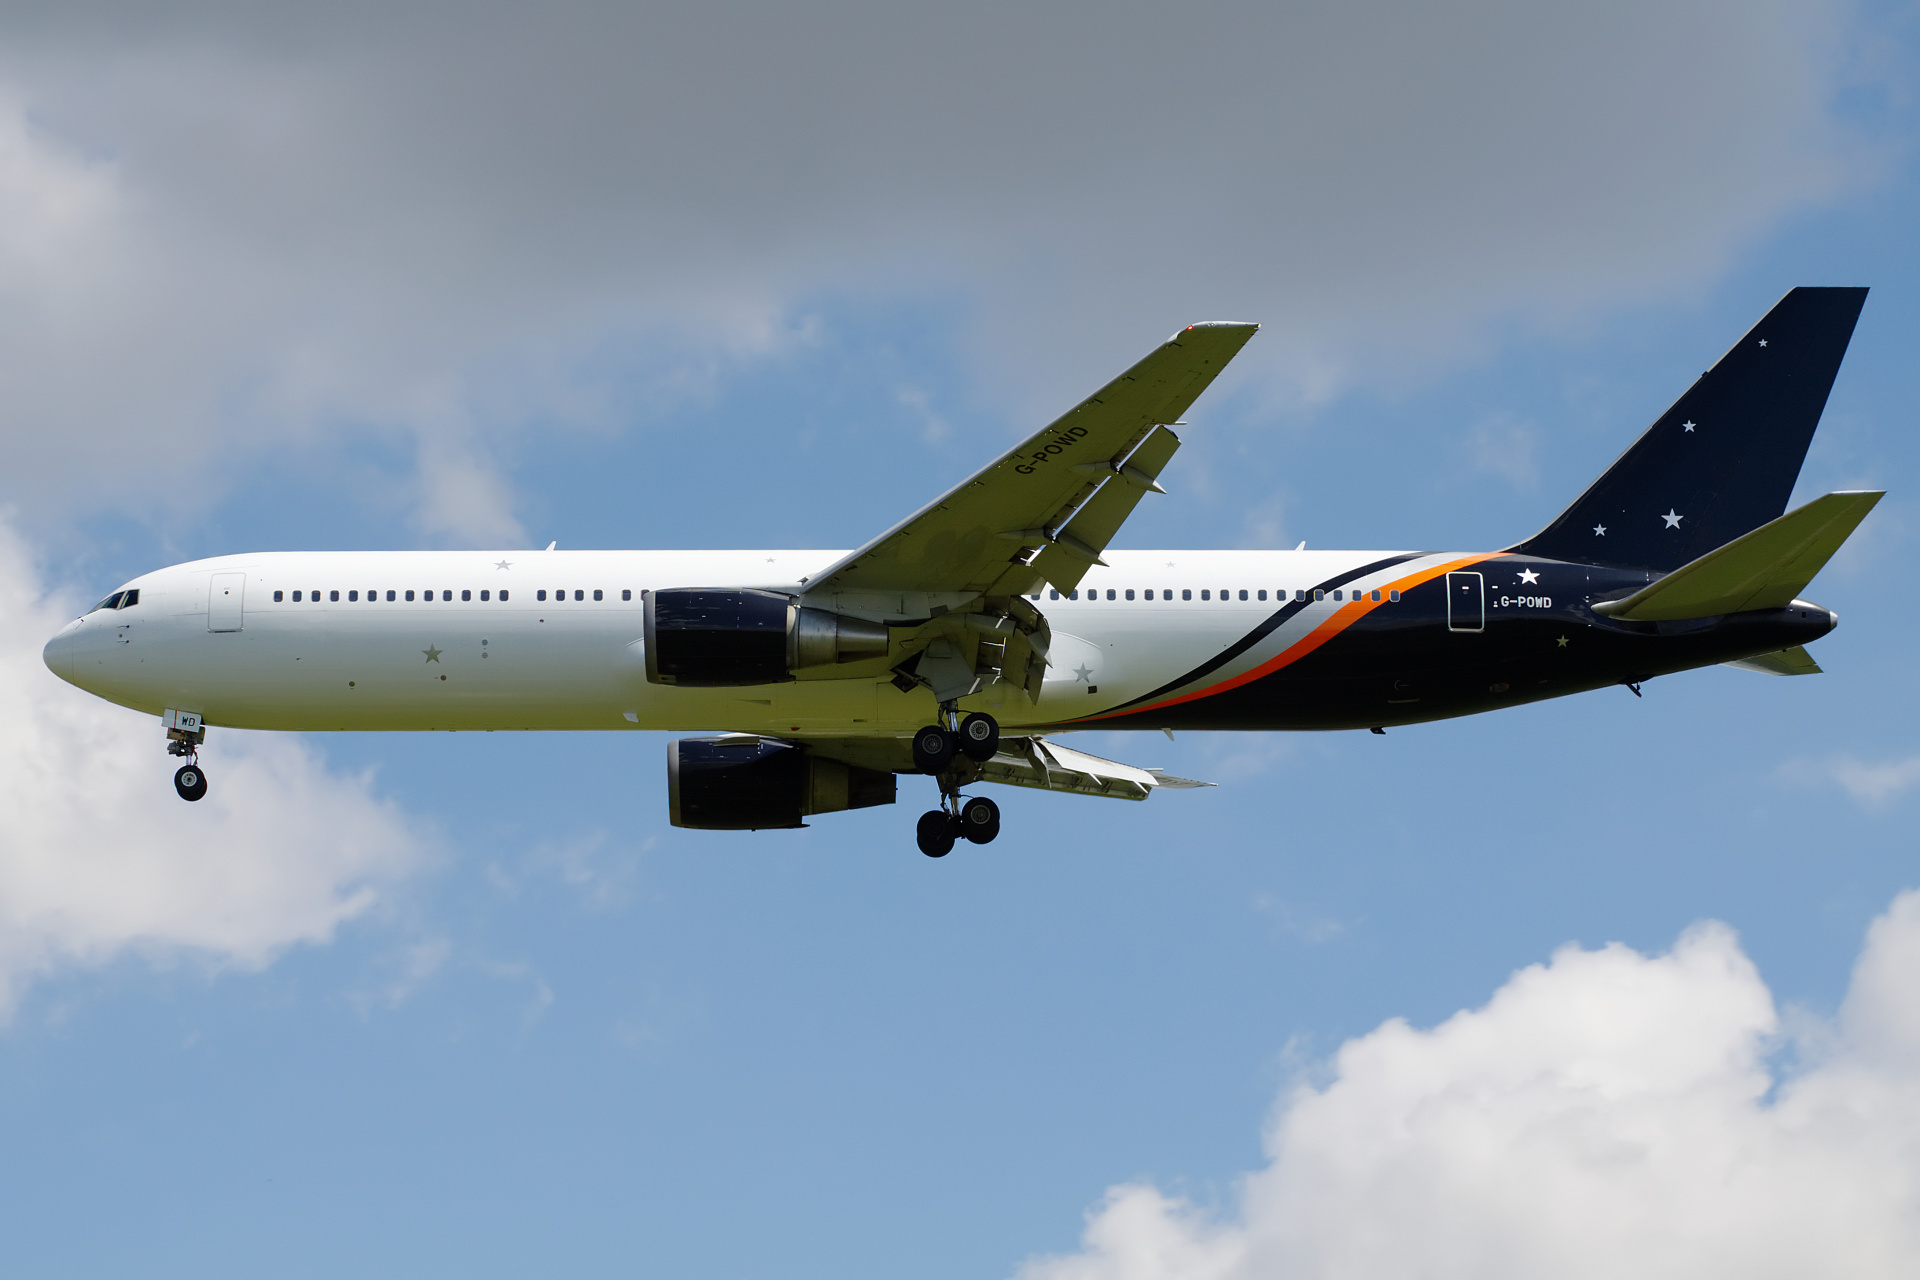 G-POWD, Titan Airways (Aircraft » EPWA Spotting » Boeing 767-300)